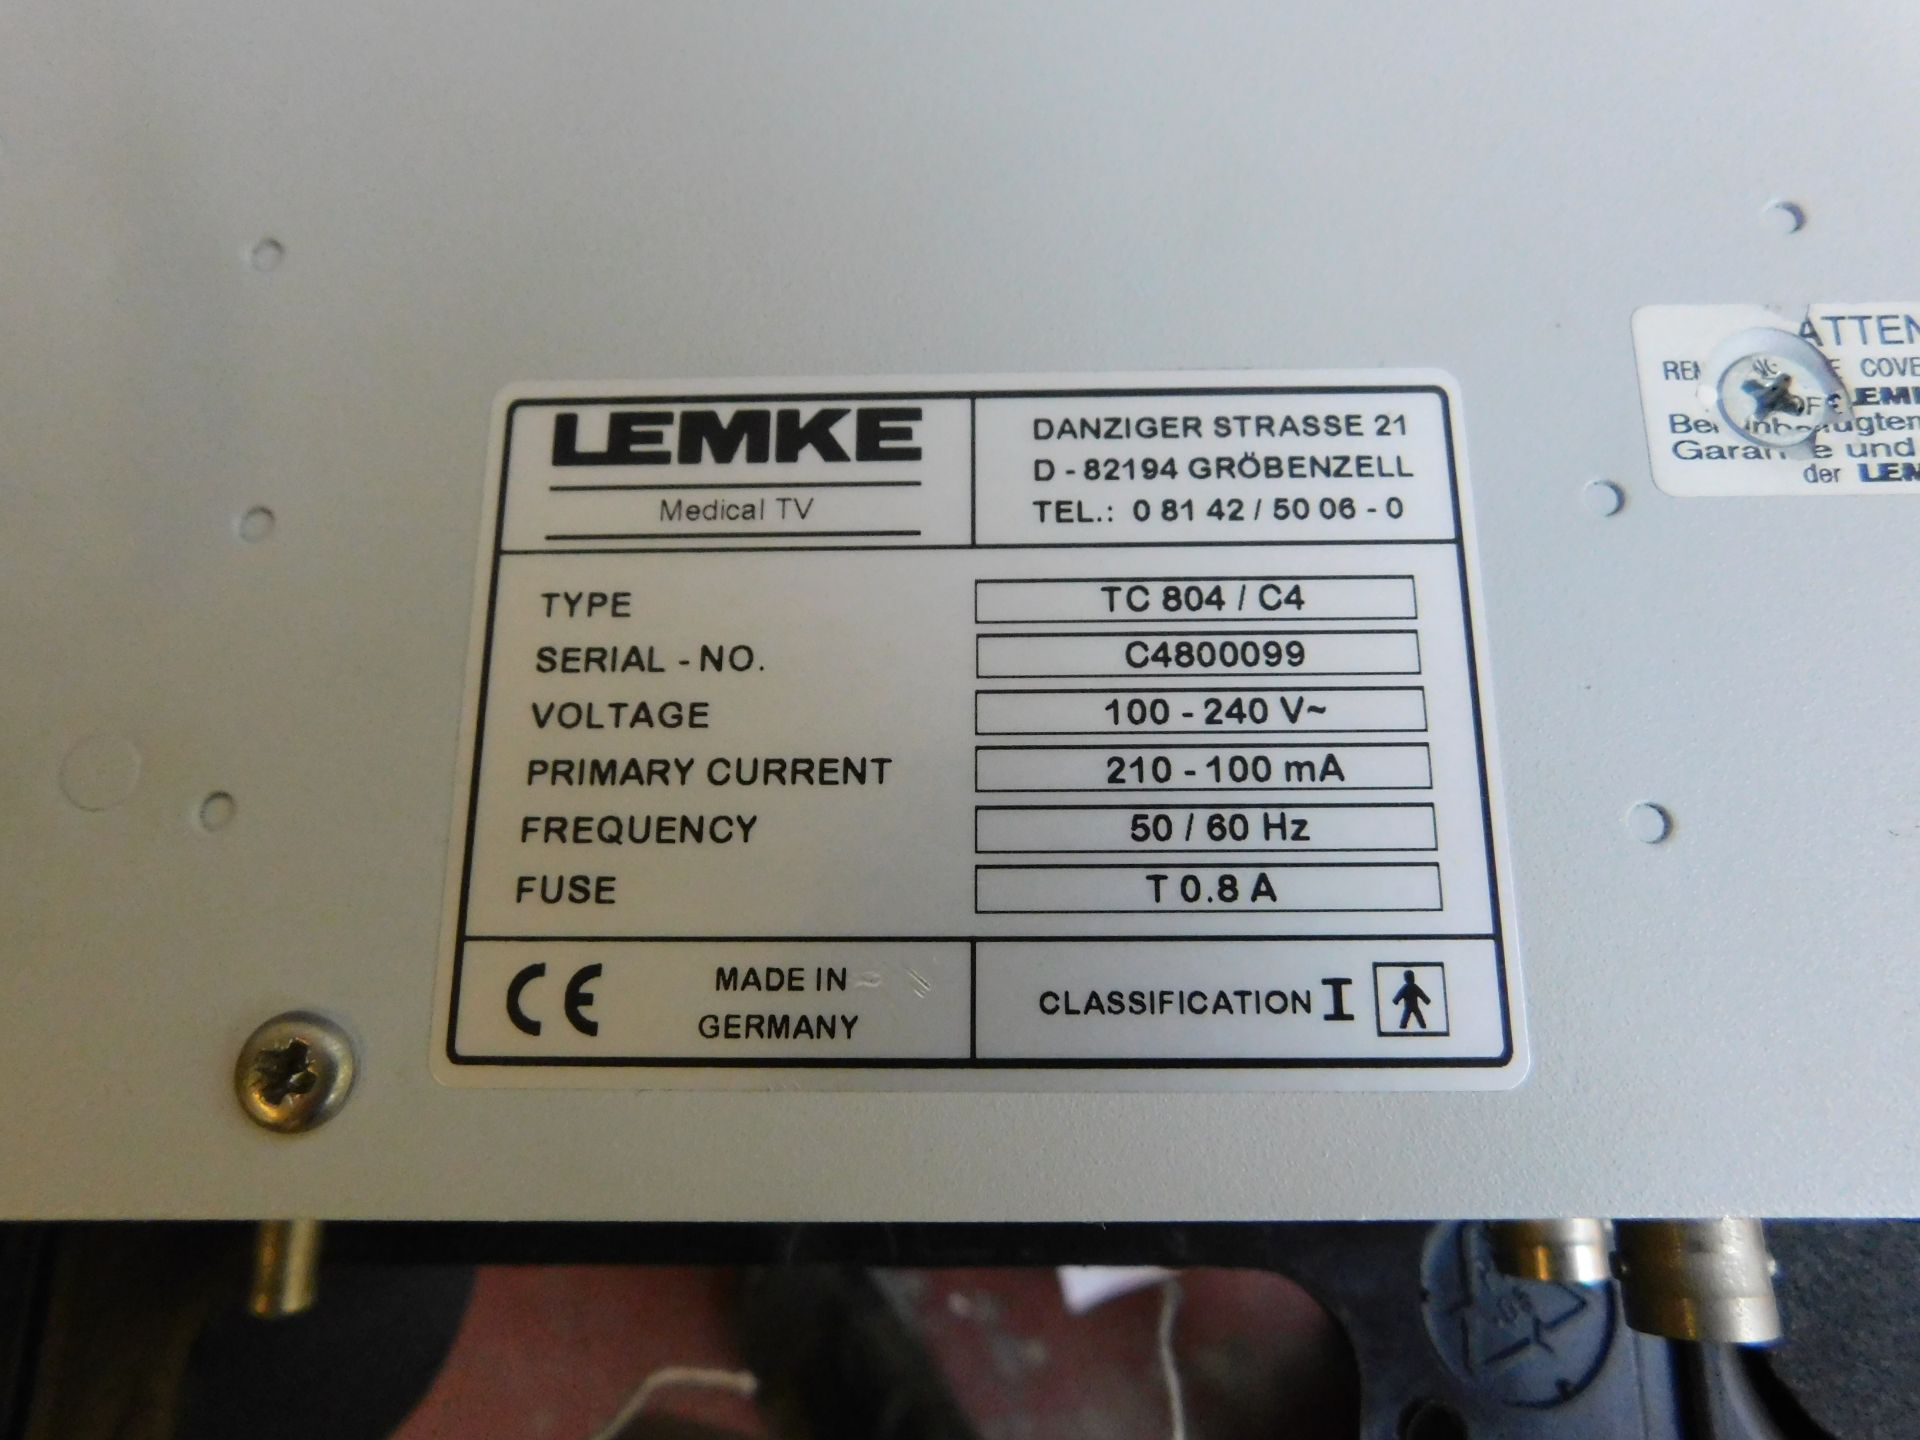 Lemke Digital TC804/04 Endoscopic Camera Processor, Serial Number C4800099 & General Accessories ( - Image 4 of 5